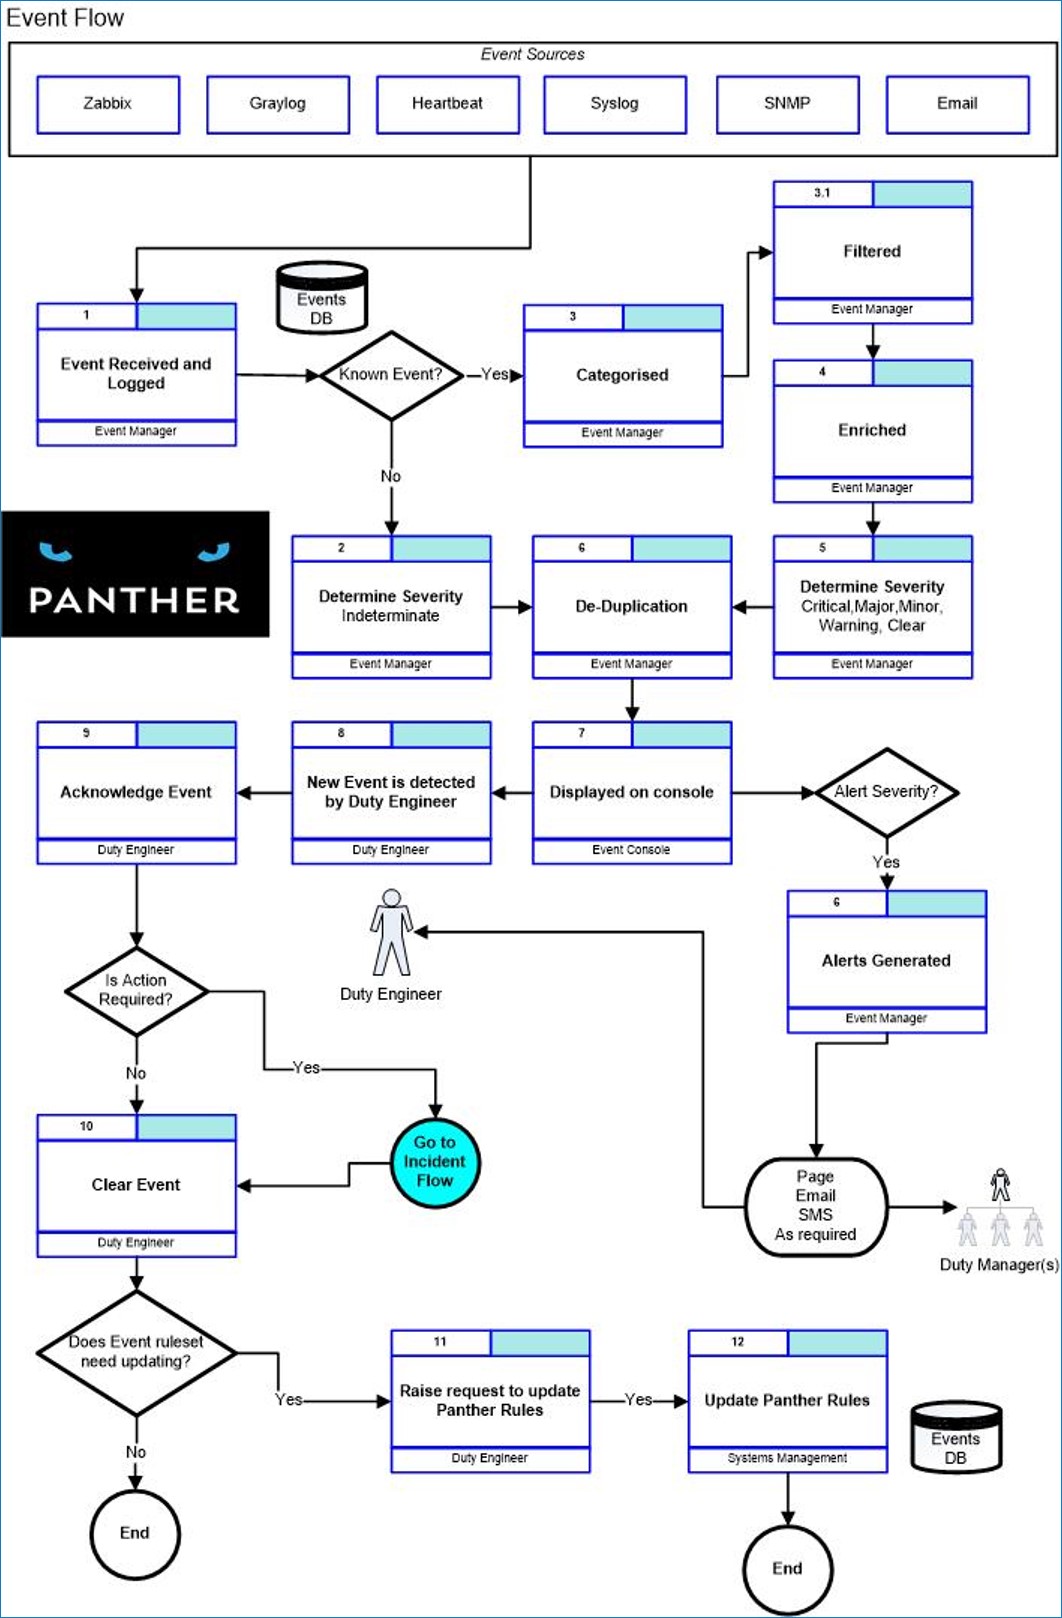 Event flow through Panther